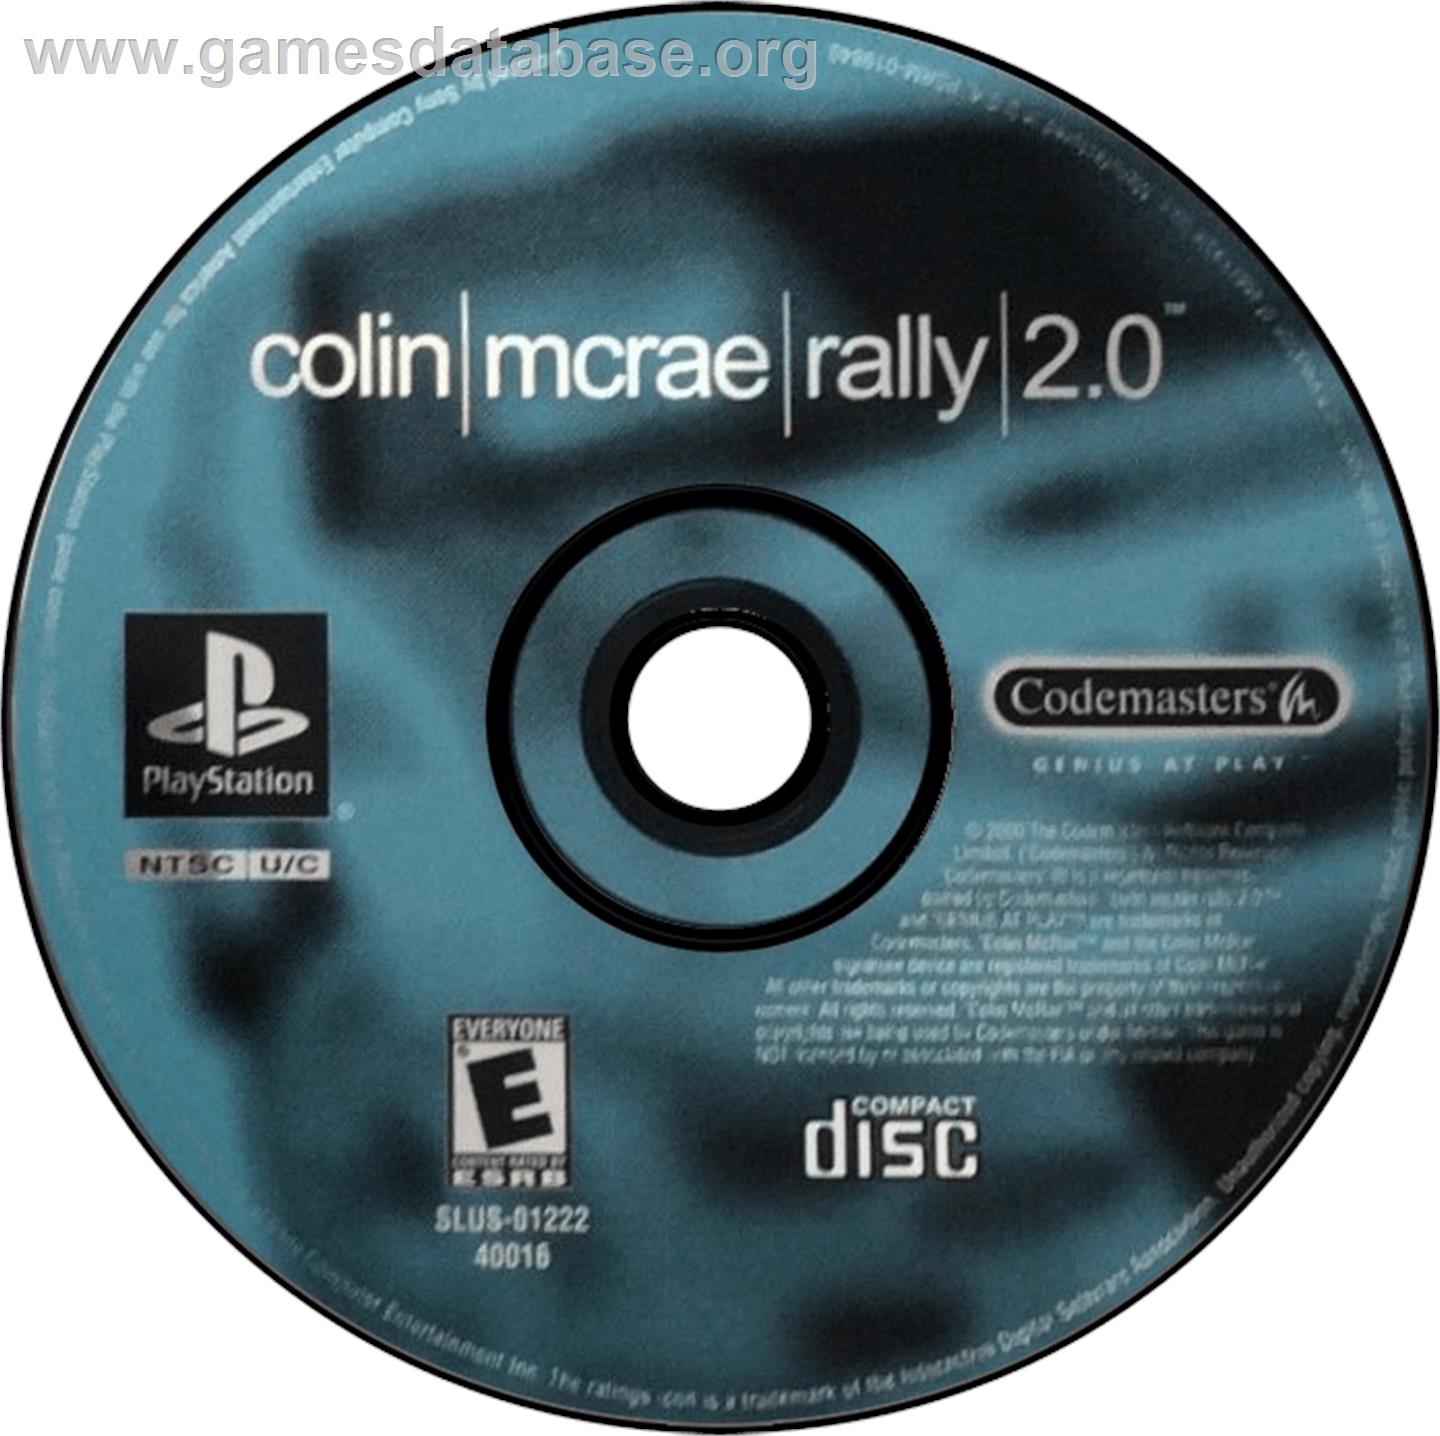 Colin McRae Rally 2.0 - Sony Playstation - Artwork - Disc